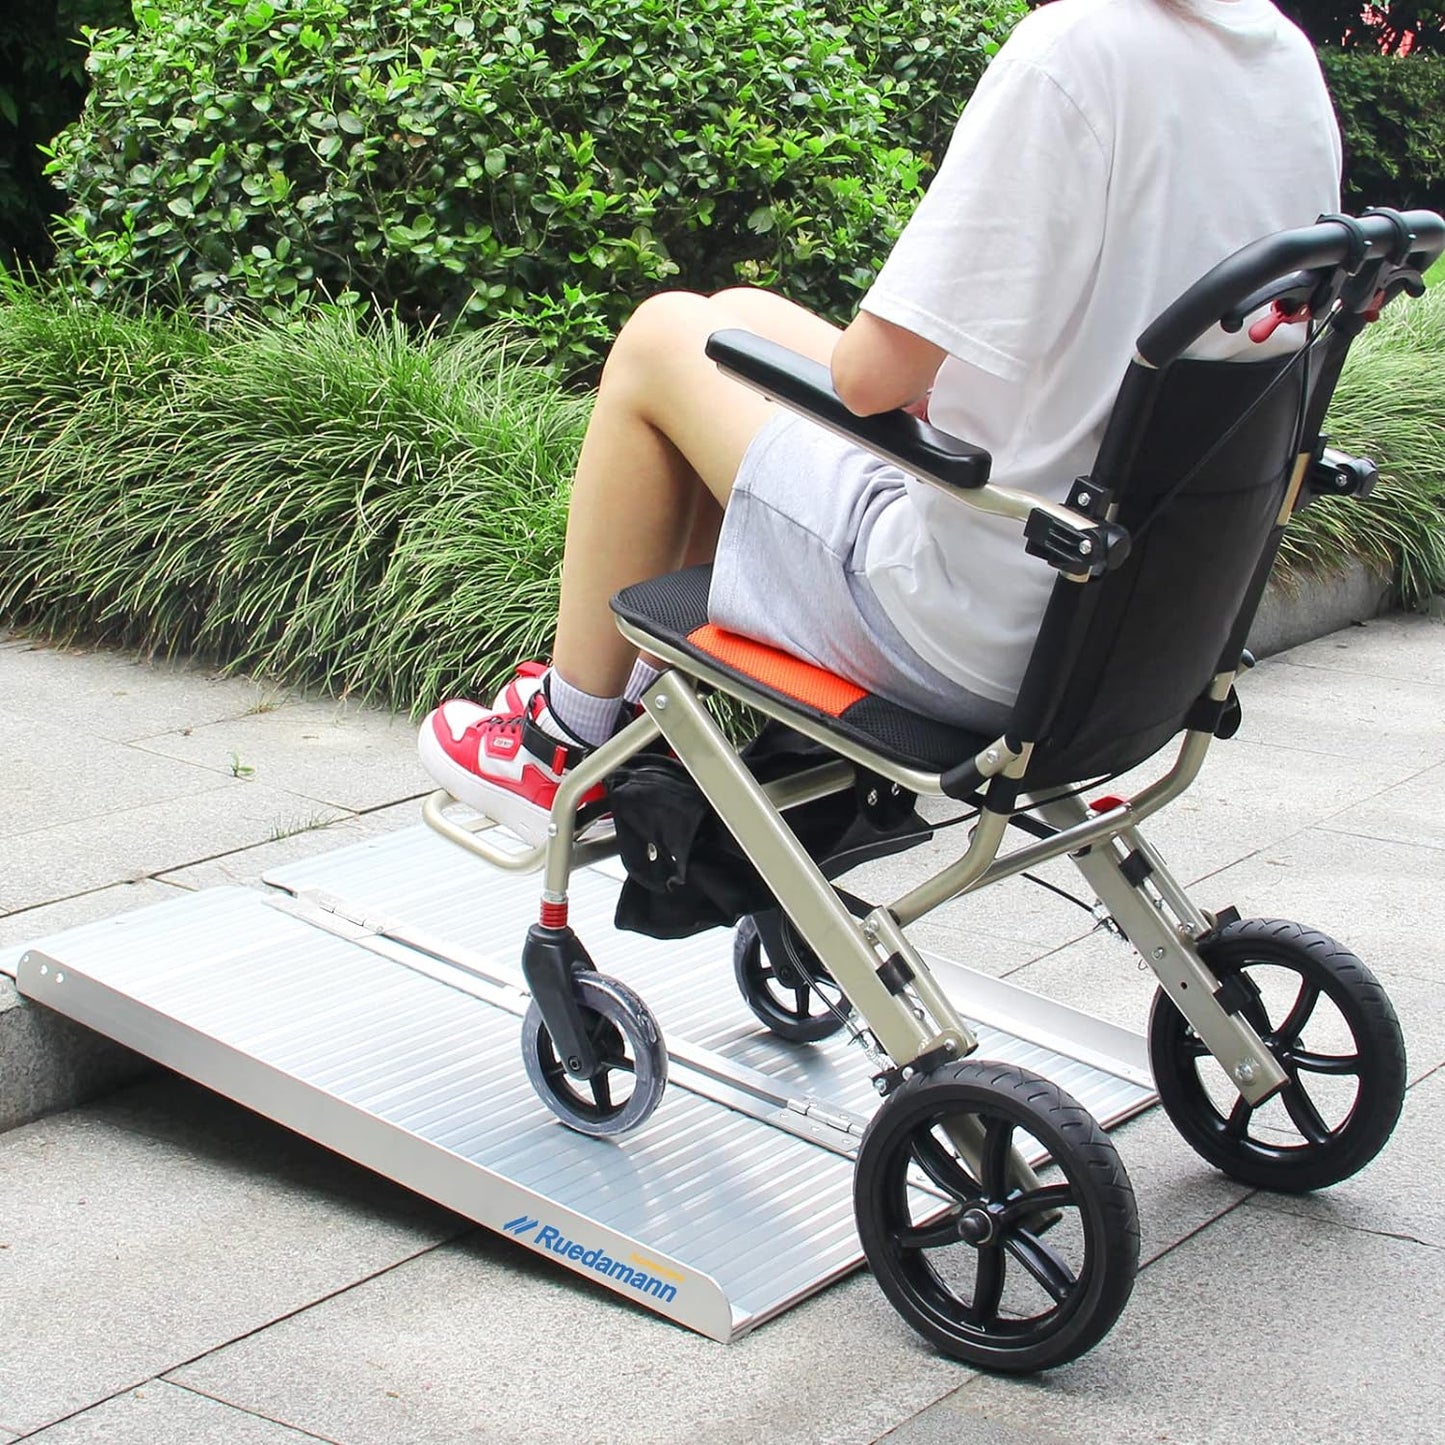 Ruedamann® Folding Aluminum Wheelchair Ramps for Stairs Portable